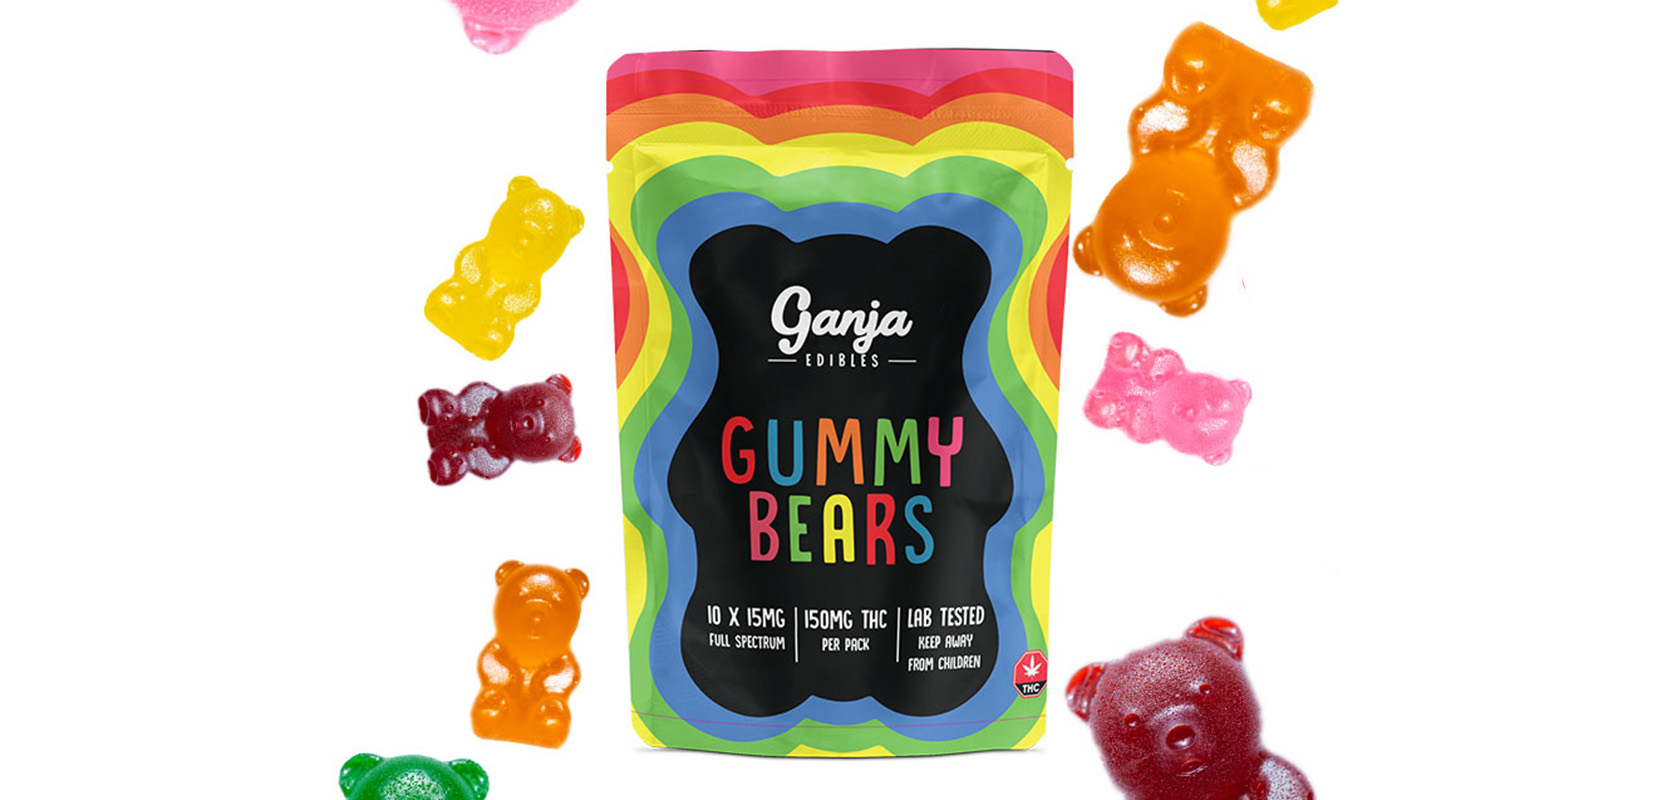 Ganja Edibles Regular Ganja Gummy Bears & Sour Ganja Bears for sale online in Canada.